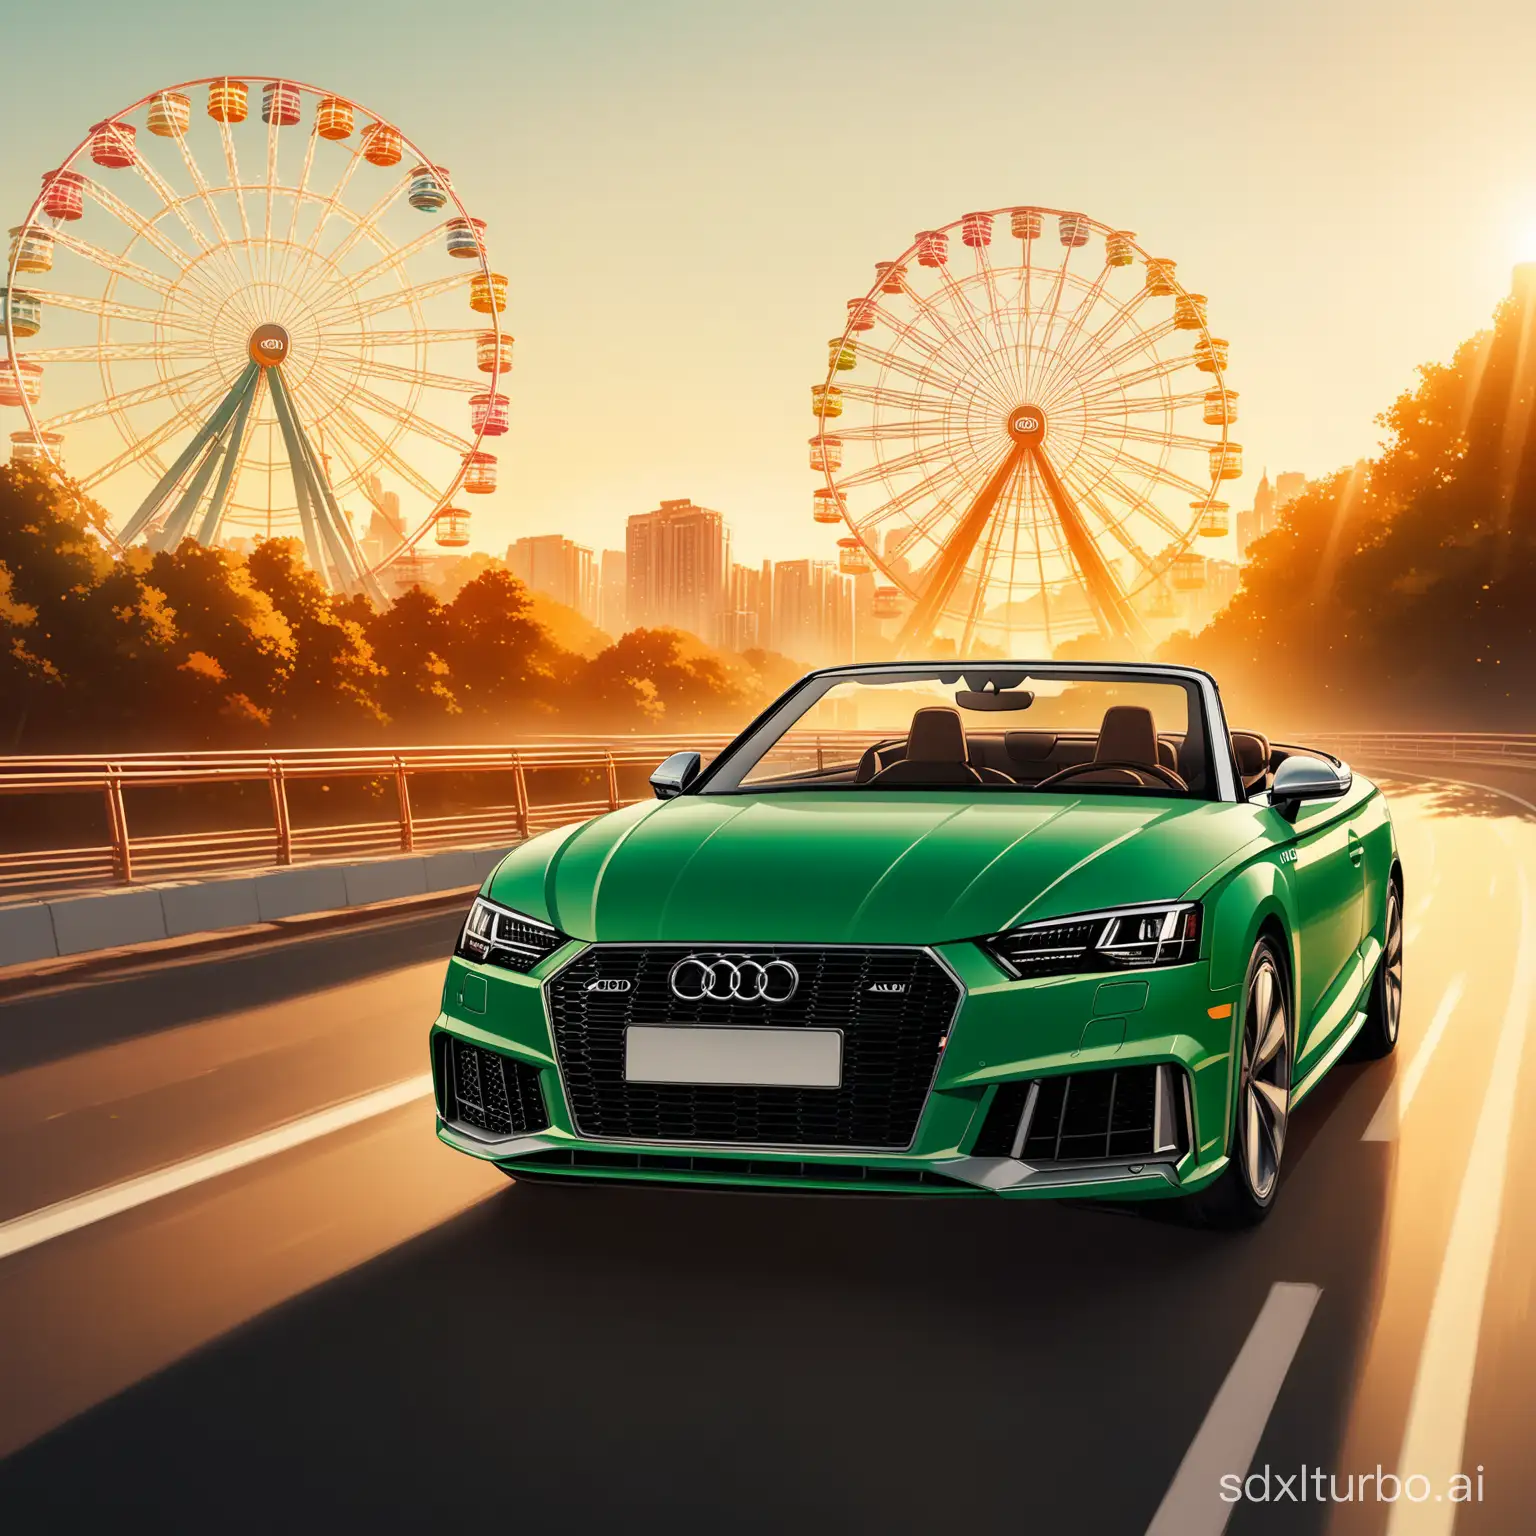 Green-Audi-Convertible-Driving-by-Ferris-Wheel